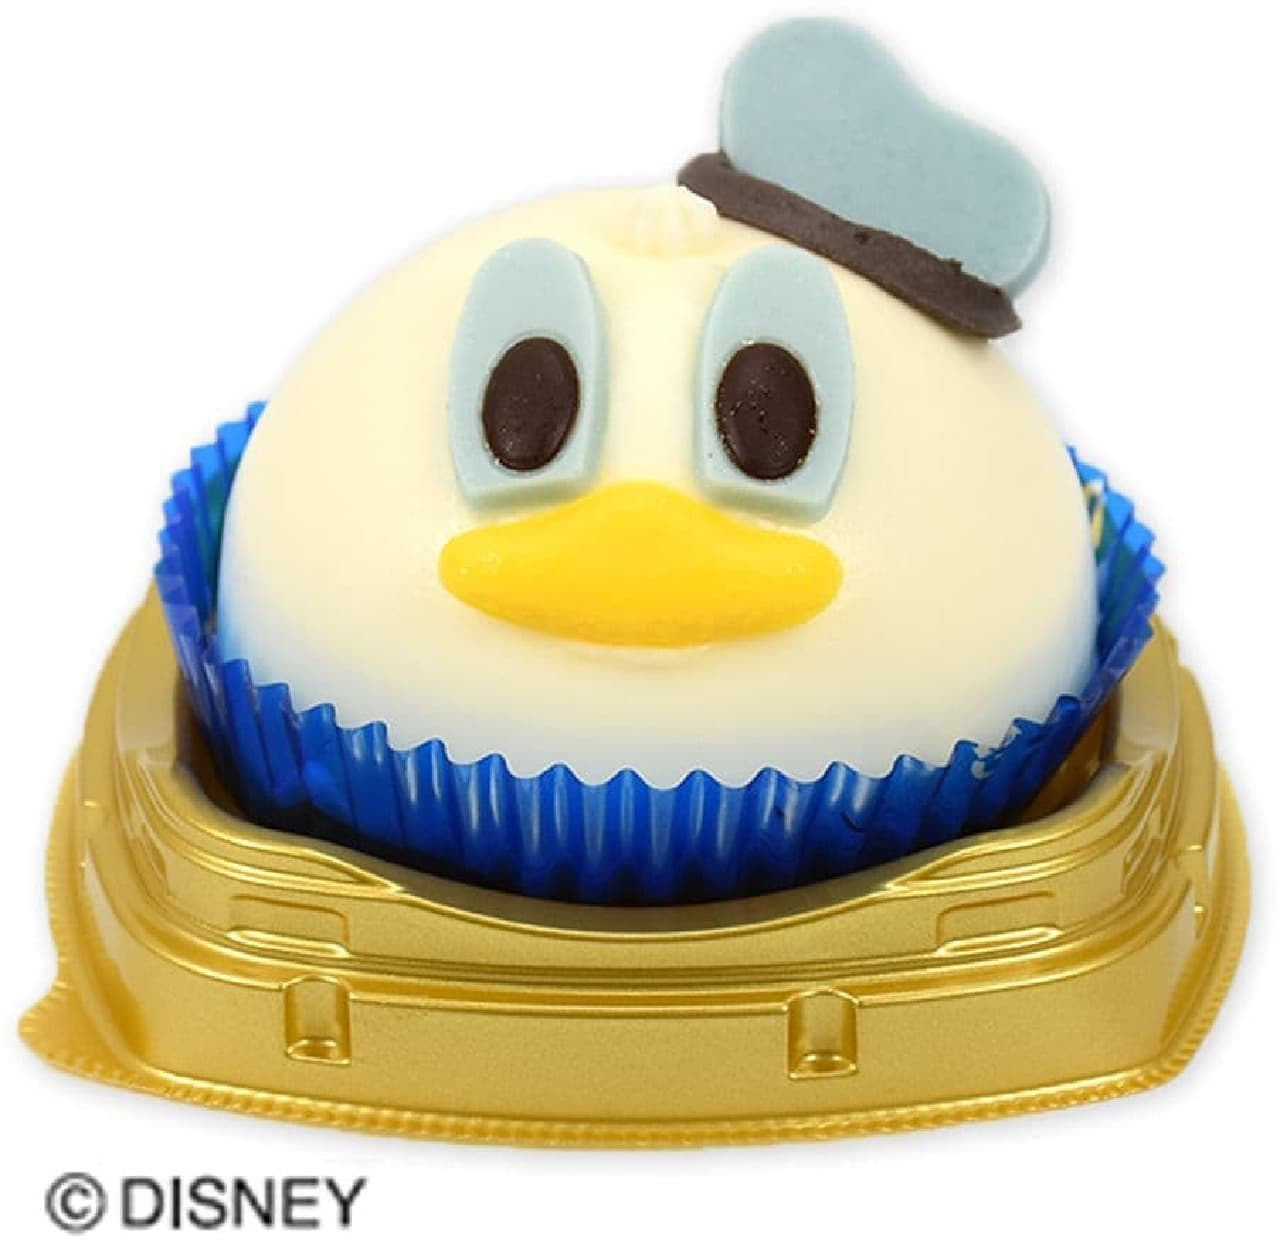 7-ELEVEN "[Donald Duck] Vanilla & Chocolate"